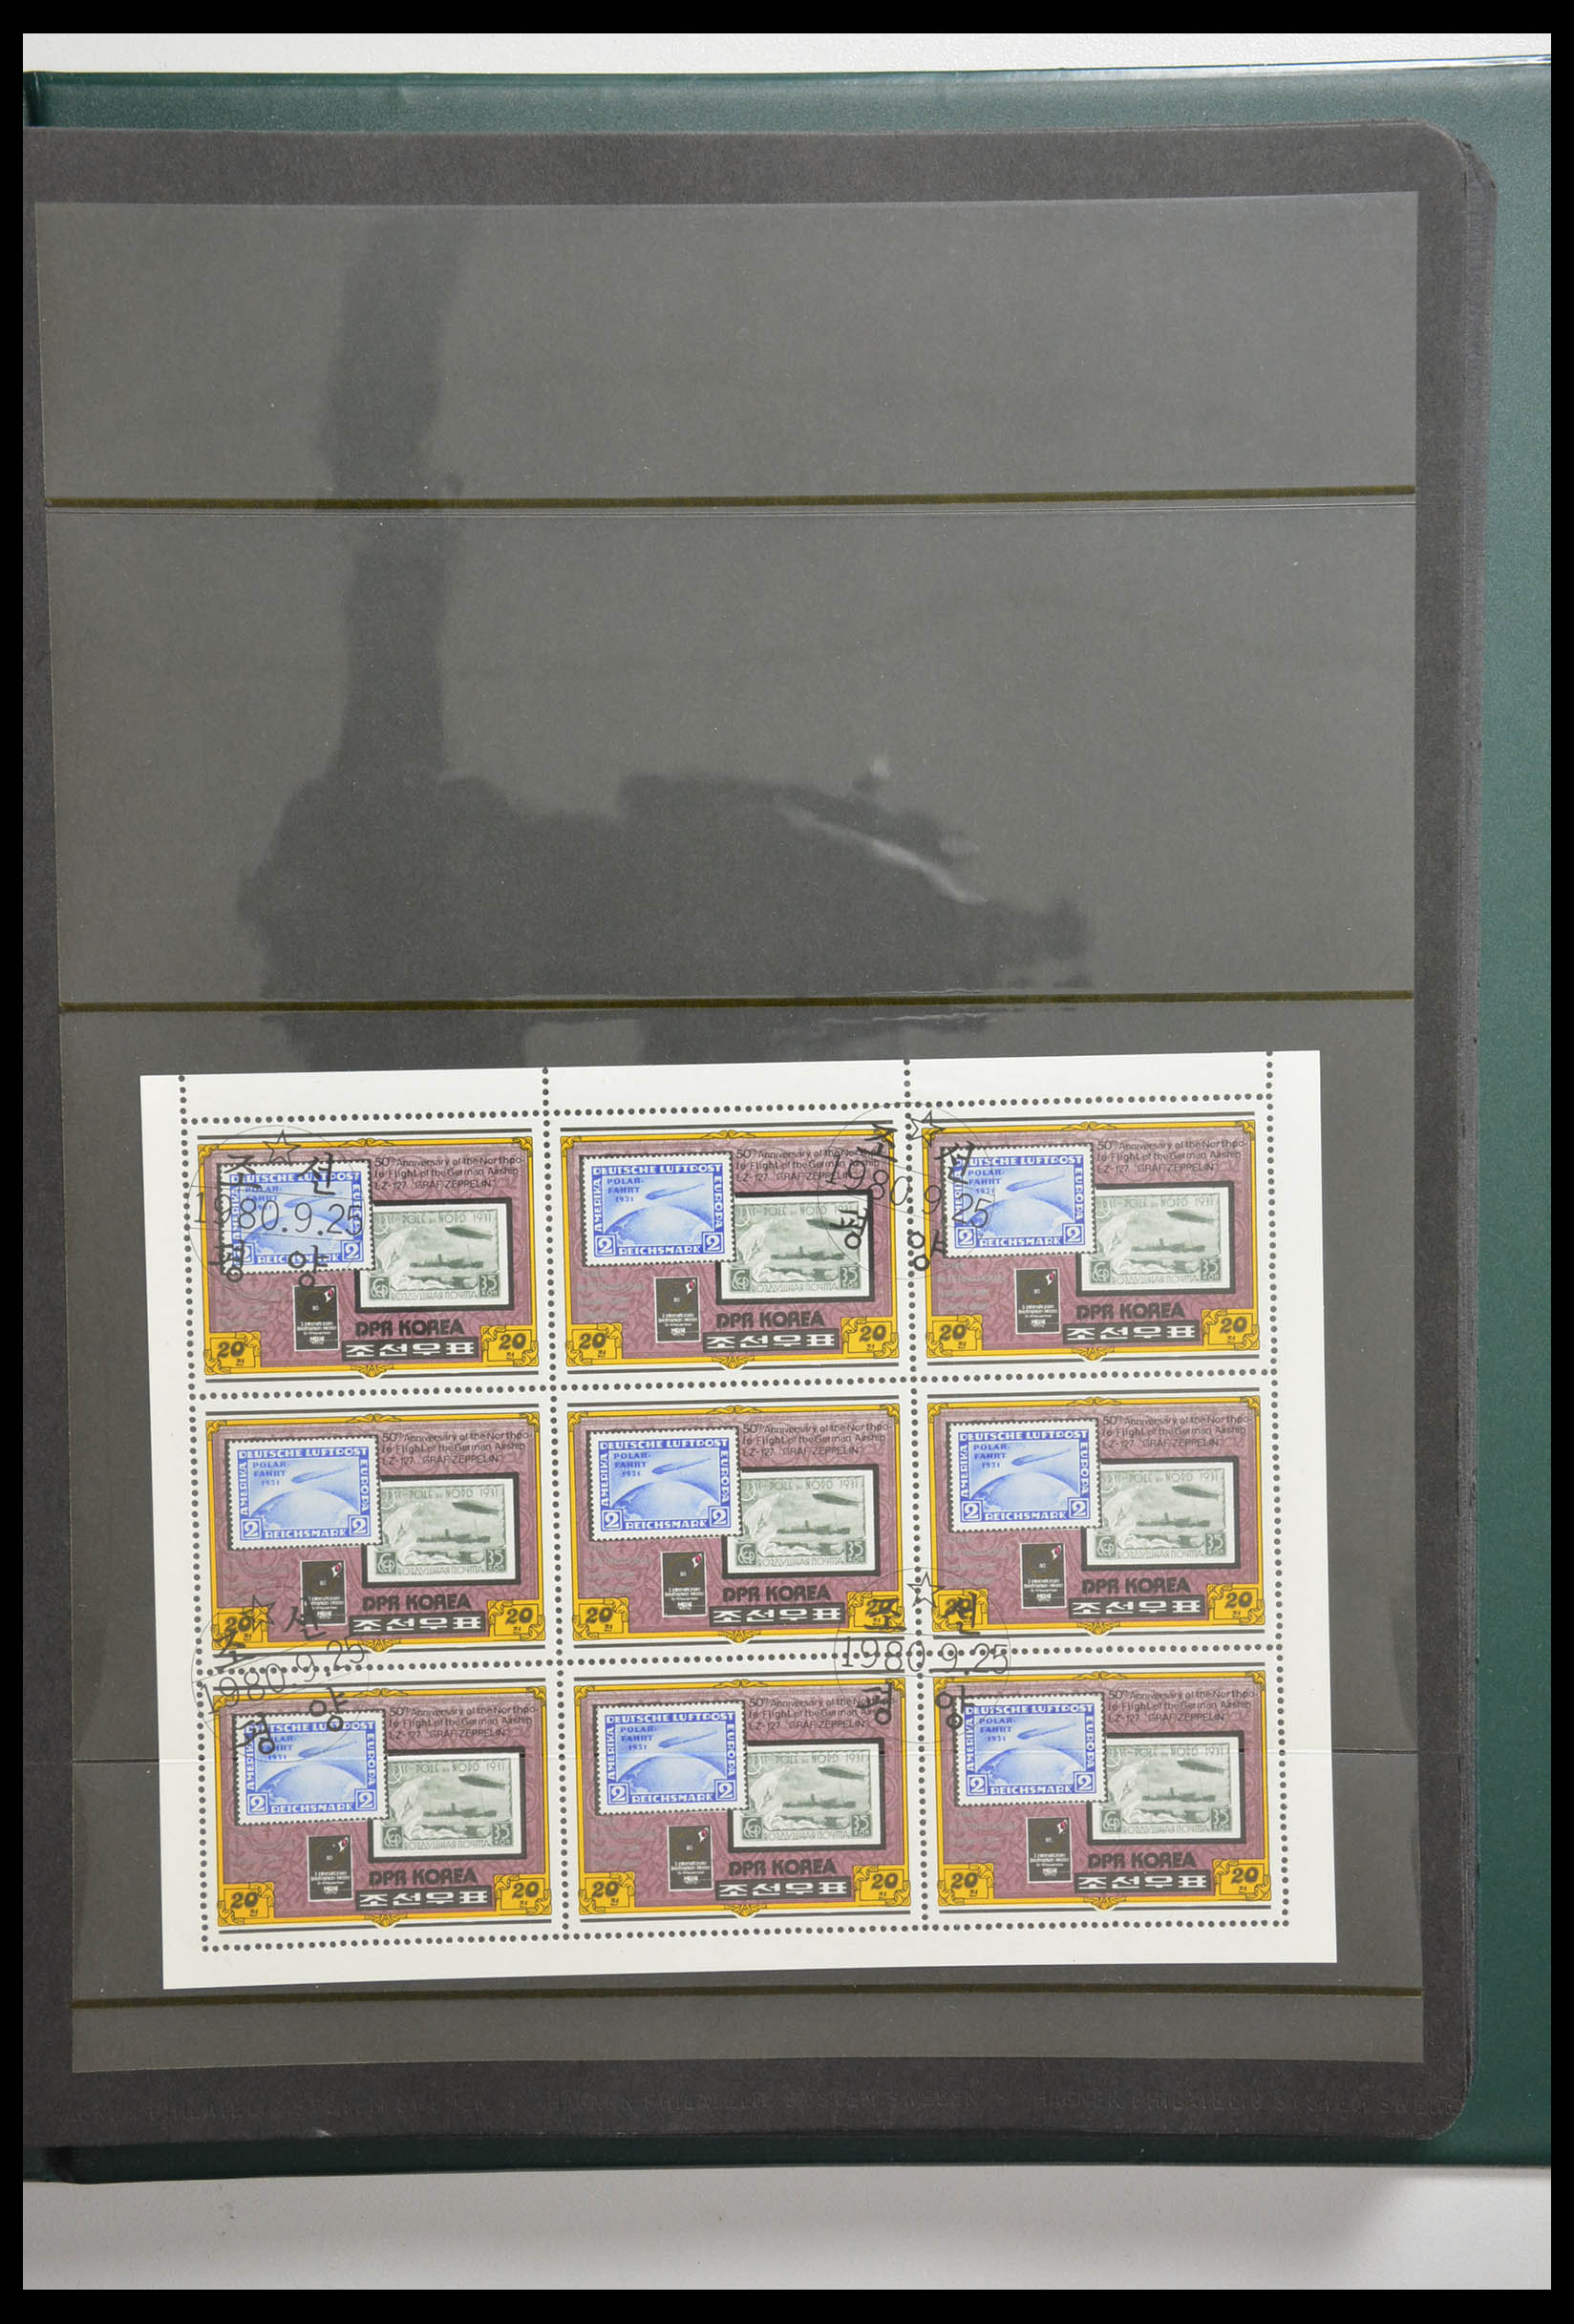 28337 055 - 28337 Postzegel op postzegel 1840-2001.